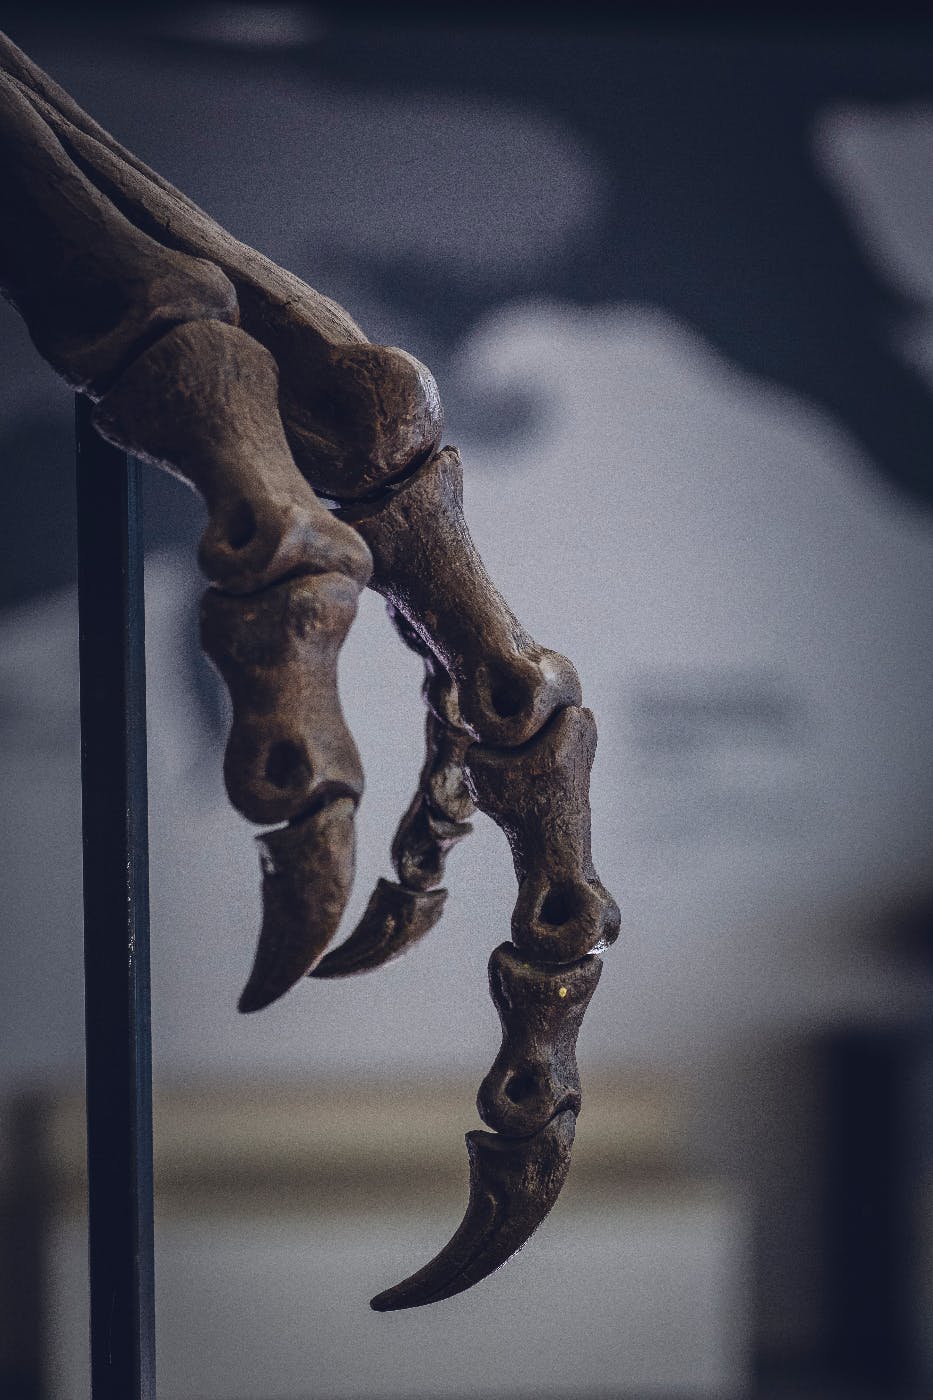 The bones of a dinosaur claw